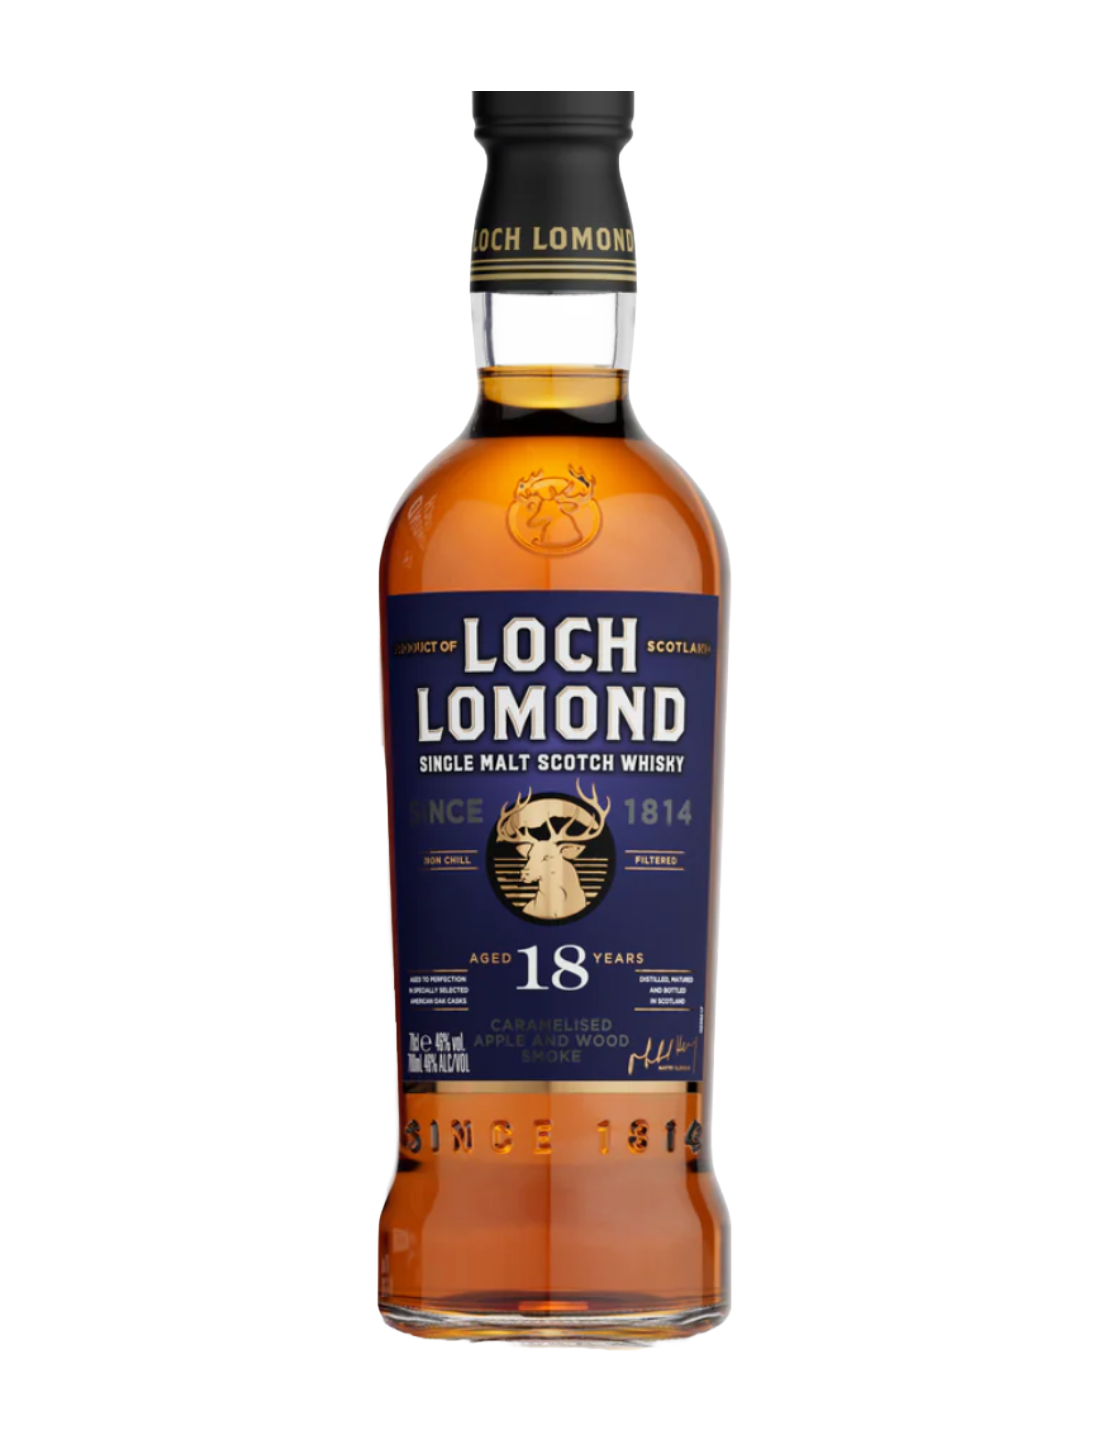 An elegant bottle of Loch Lomond 18 Year Old Inchmurrin Single Malt Scotch in front of a plain white background